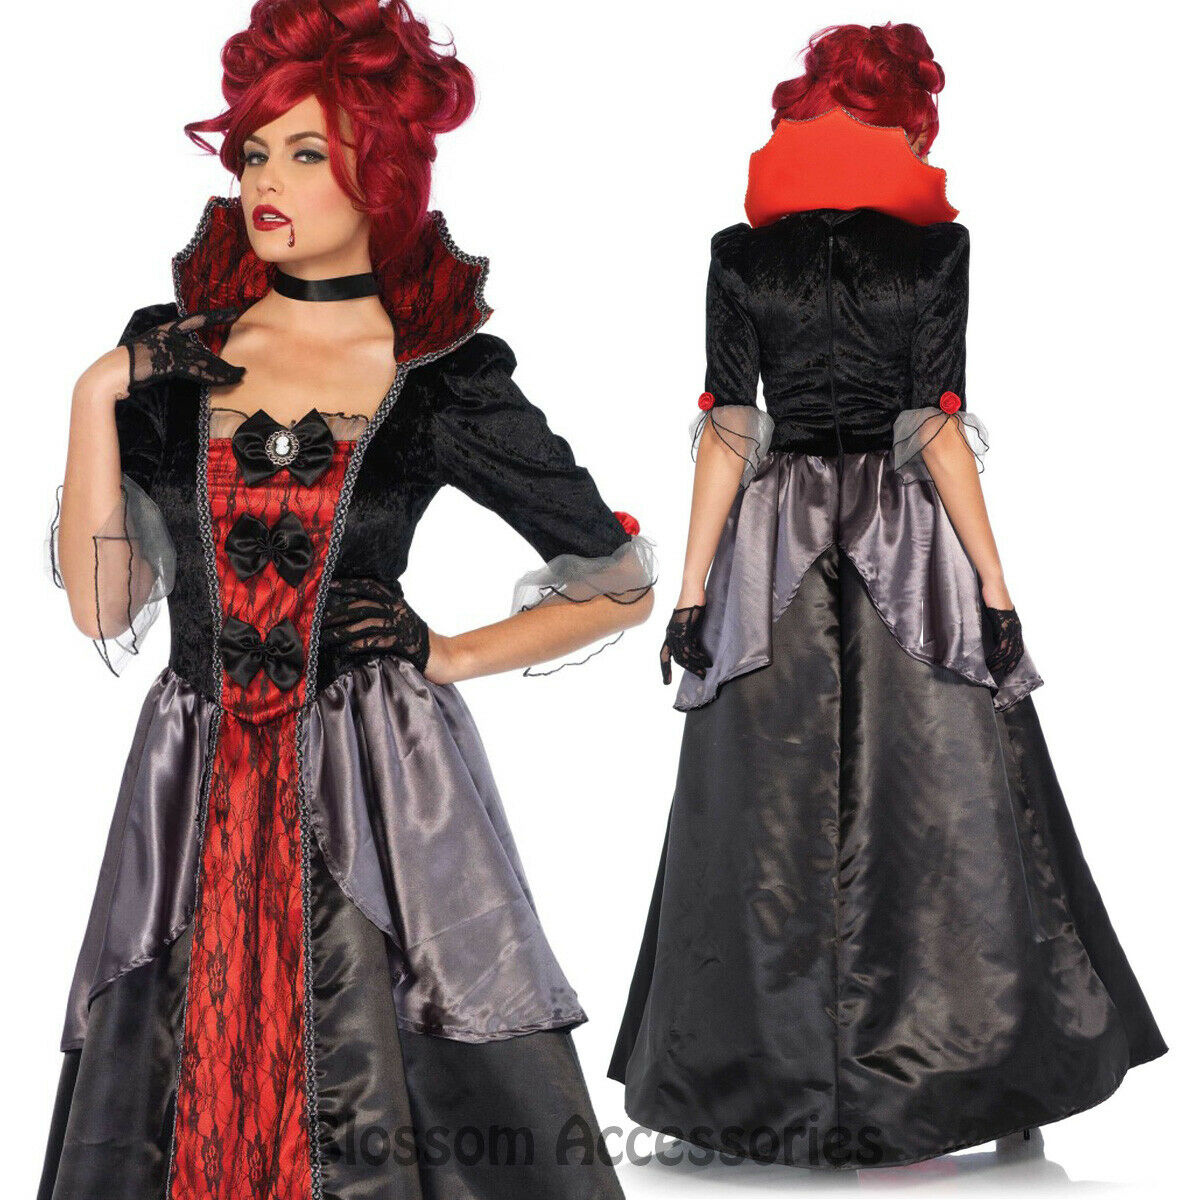 Blood countess Deluxe Leg Avenue Vampire Costume | Chaos Bazaar Costumes